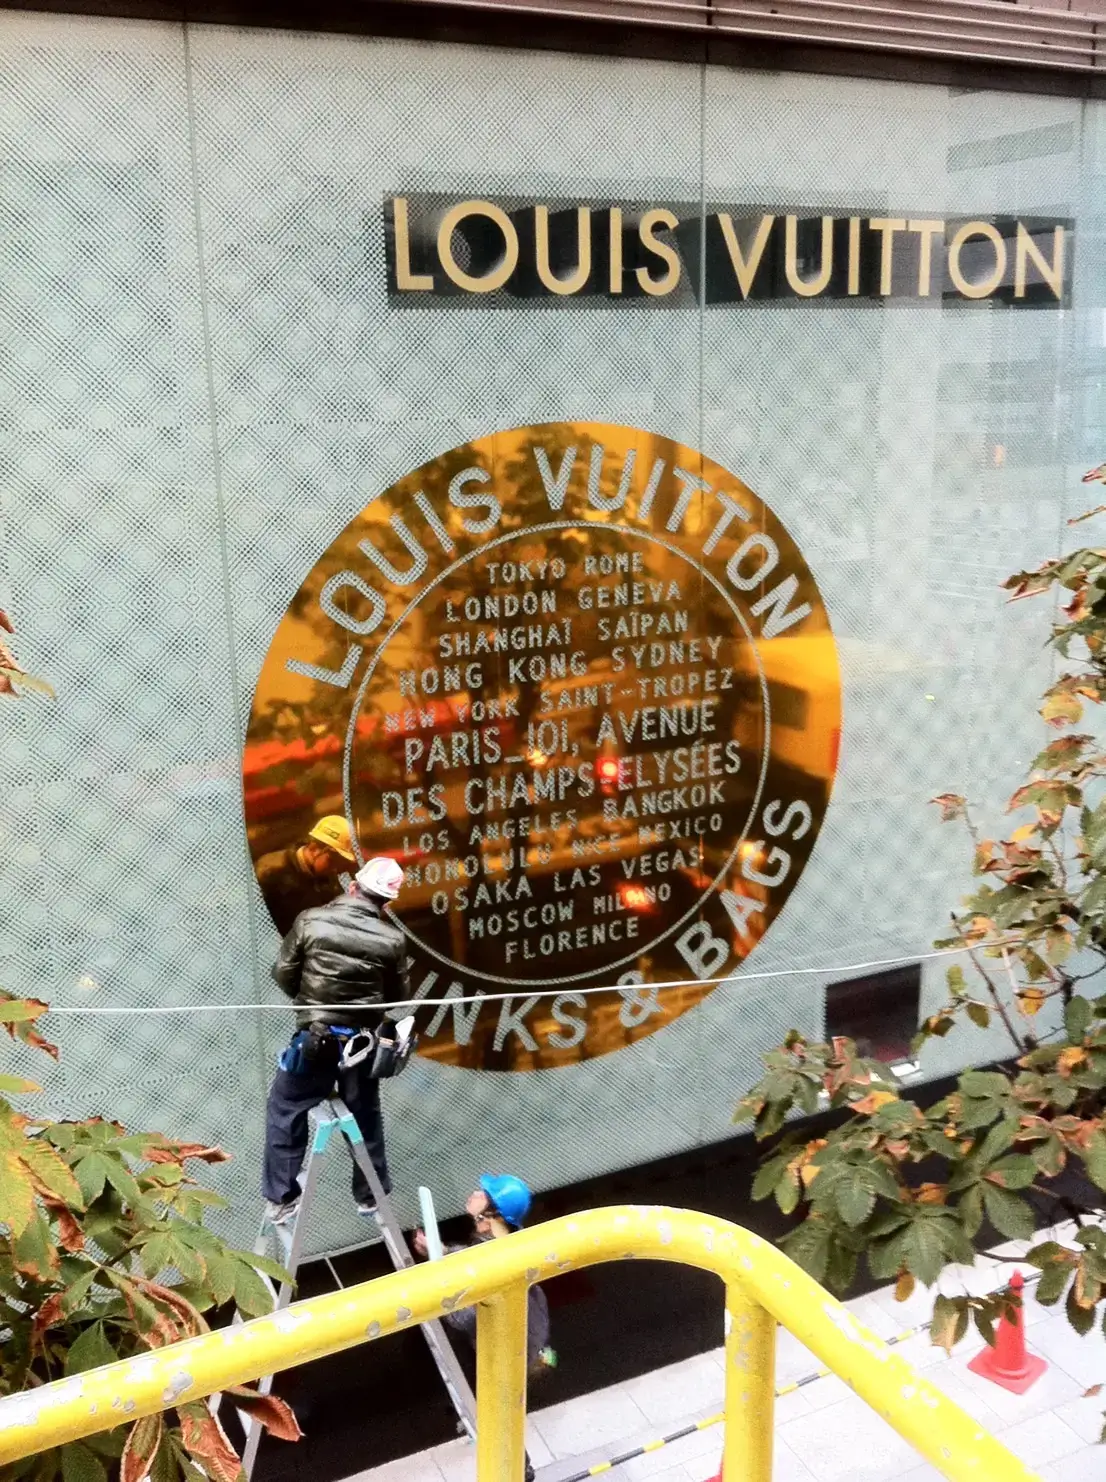 LOUIS VUITTONのテナントサイン工事